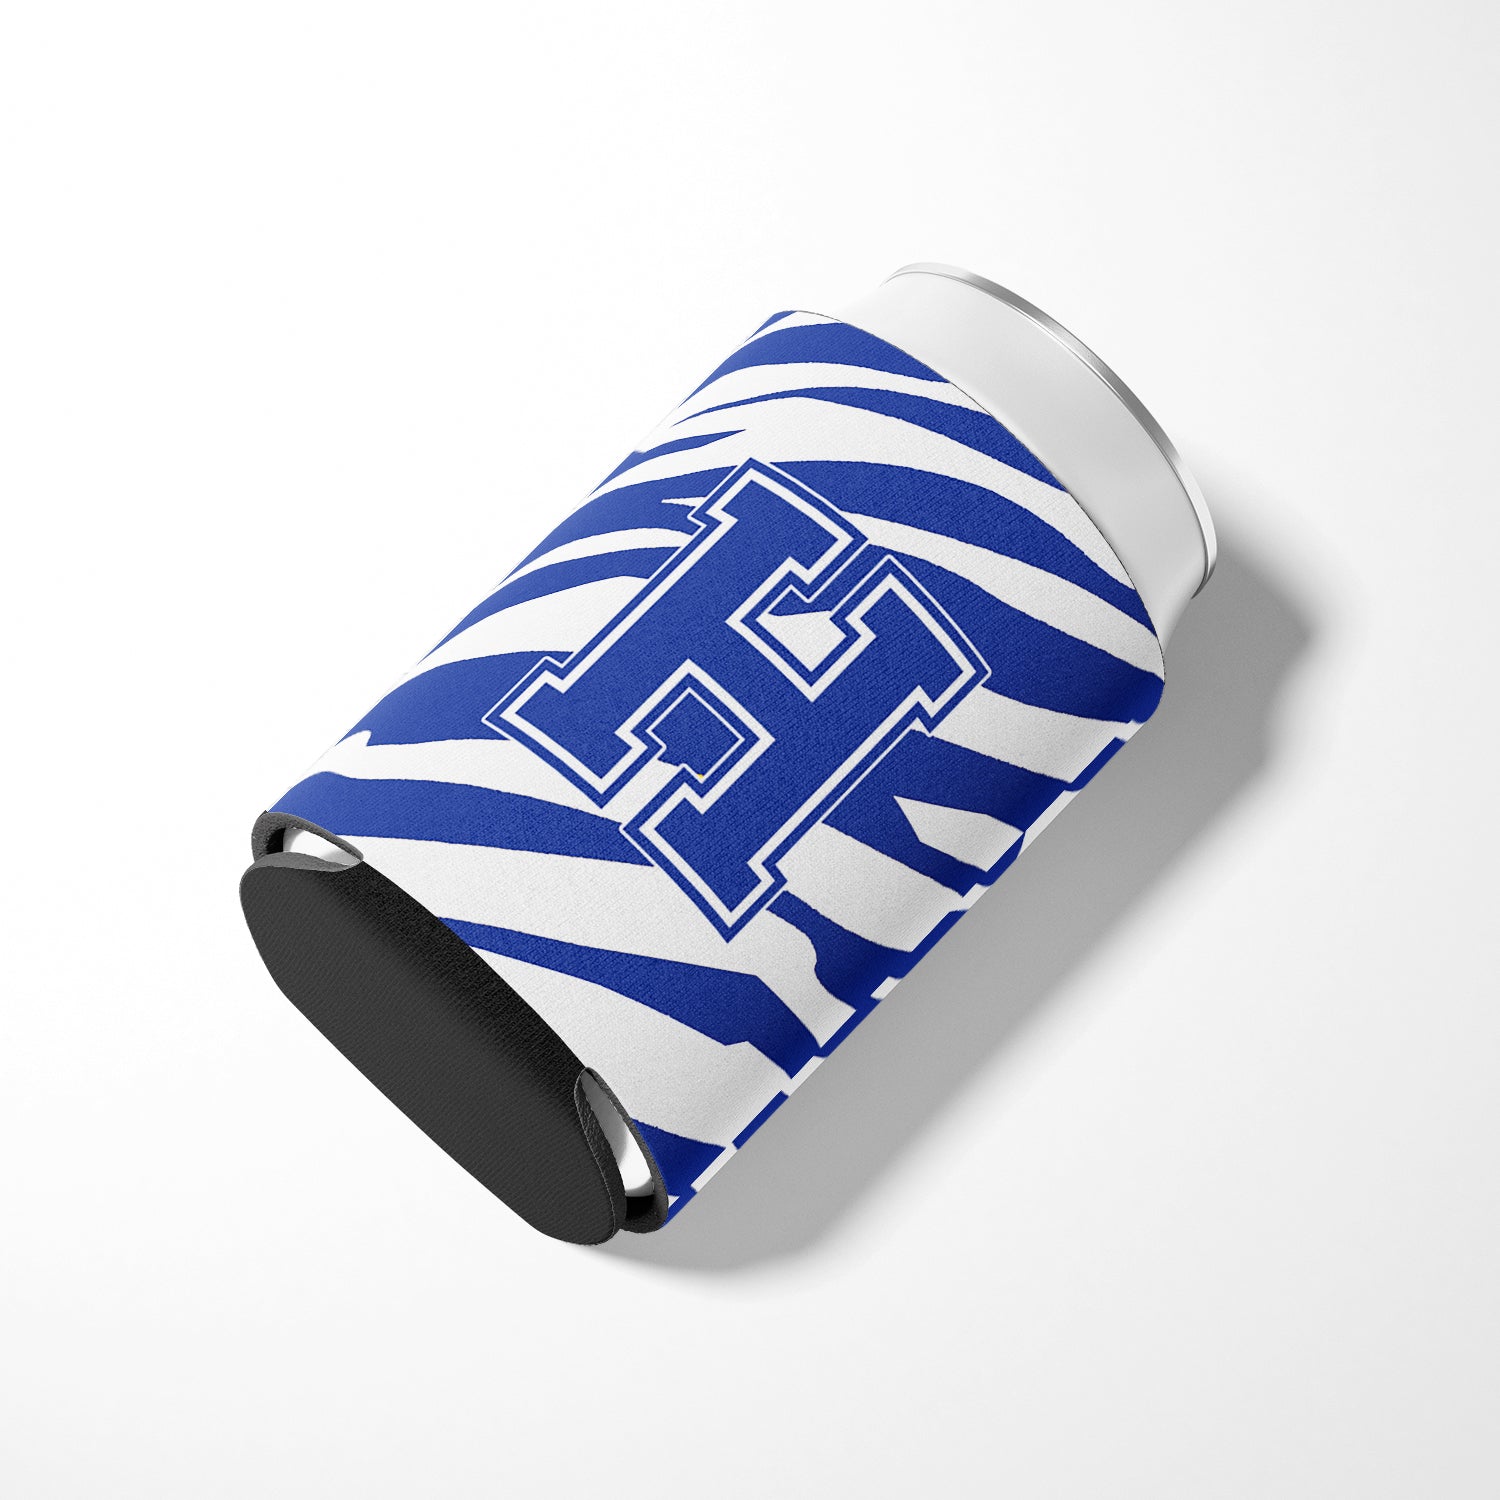 Letter H Initial Monogram - Tiger Stripe Blue and White Can Beverage Insulator Hugger